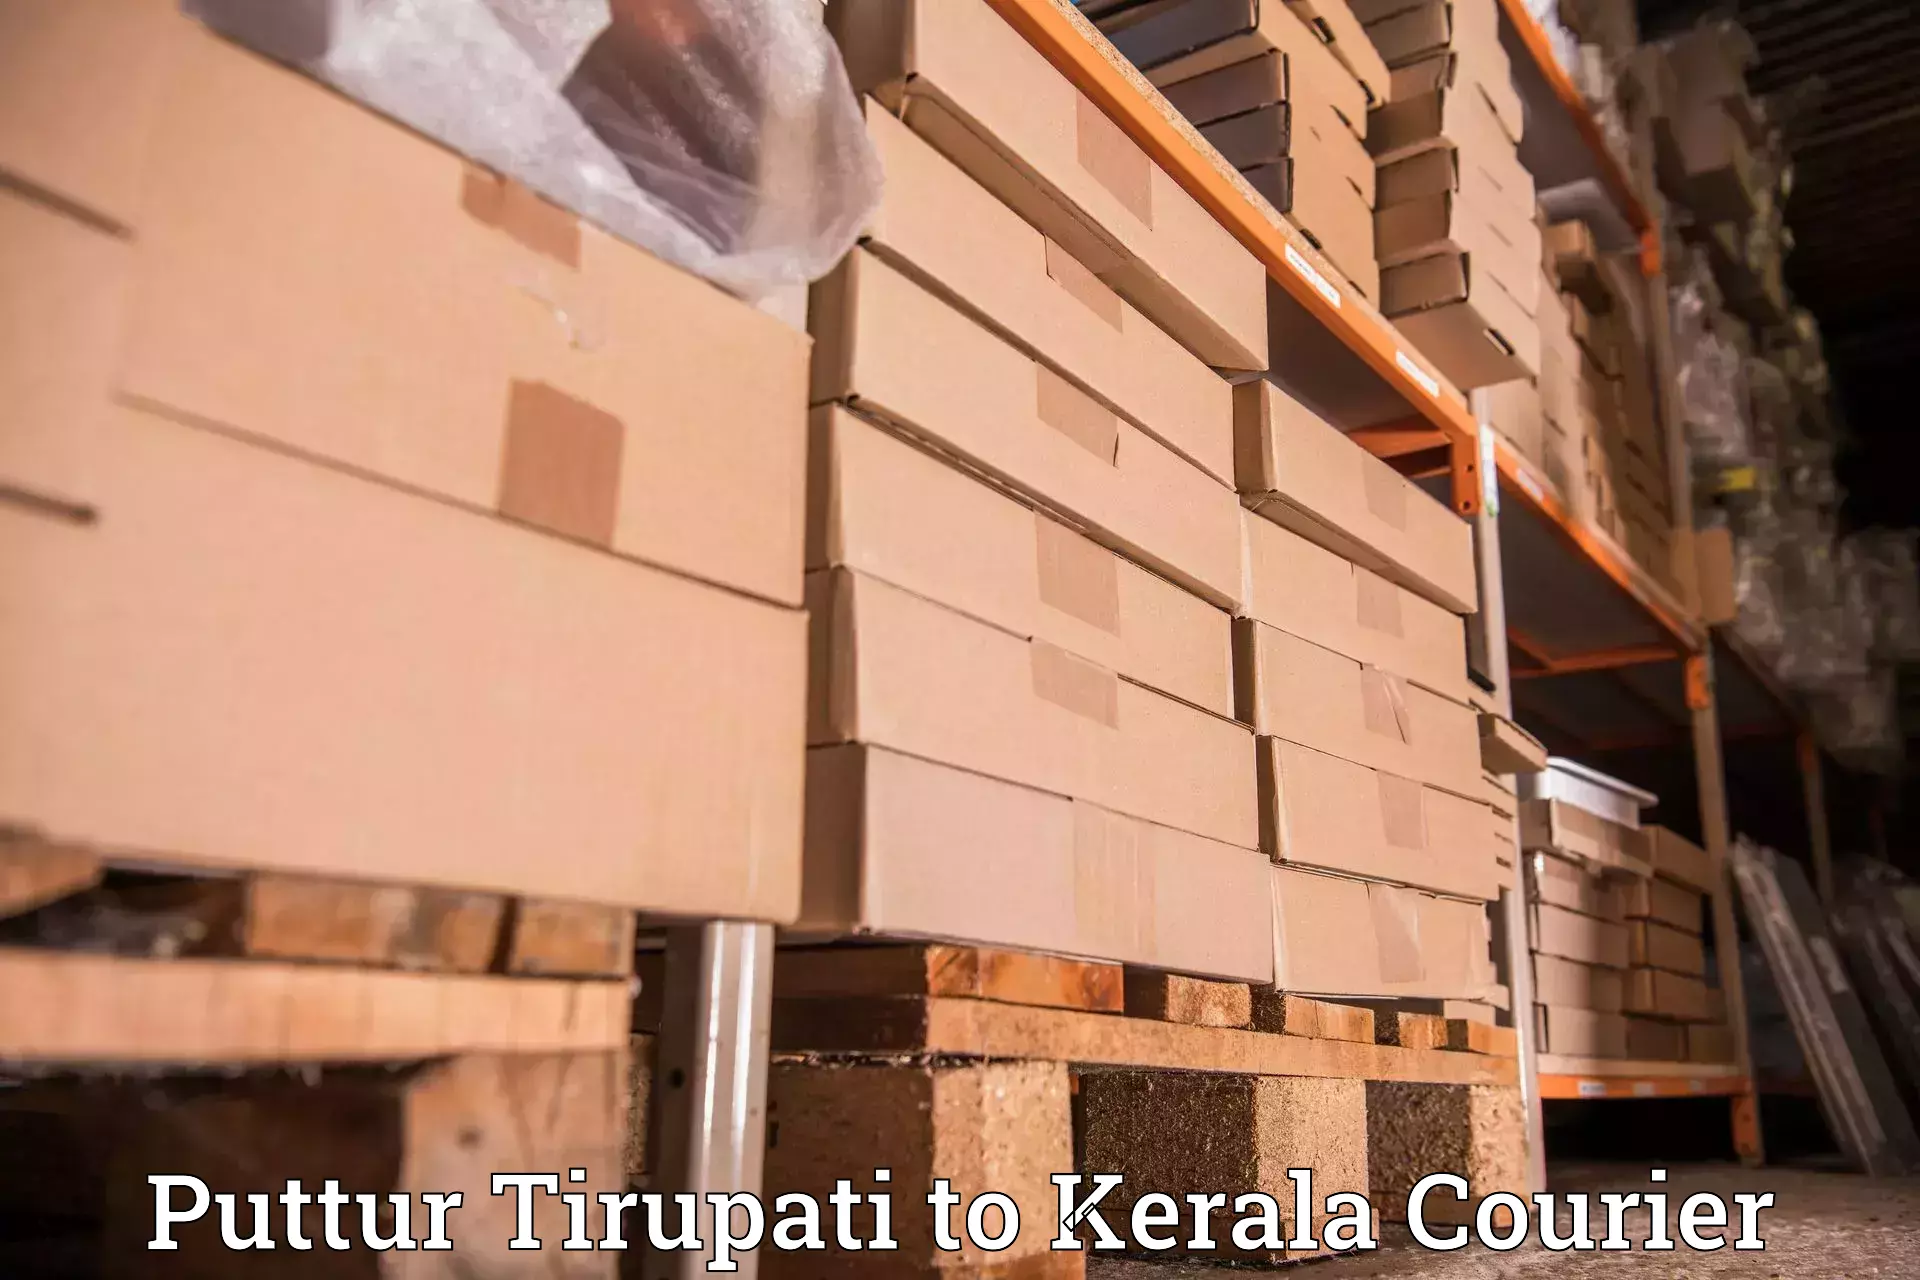 Courier app Puttur Tirupati to Pulpally